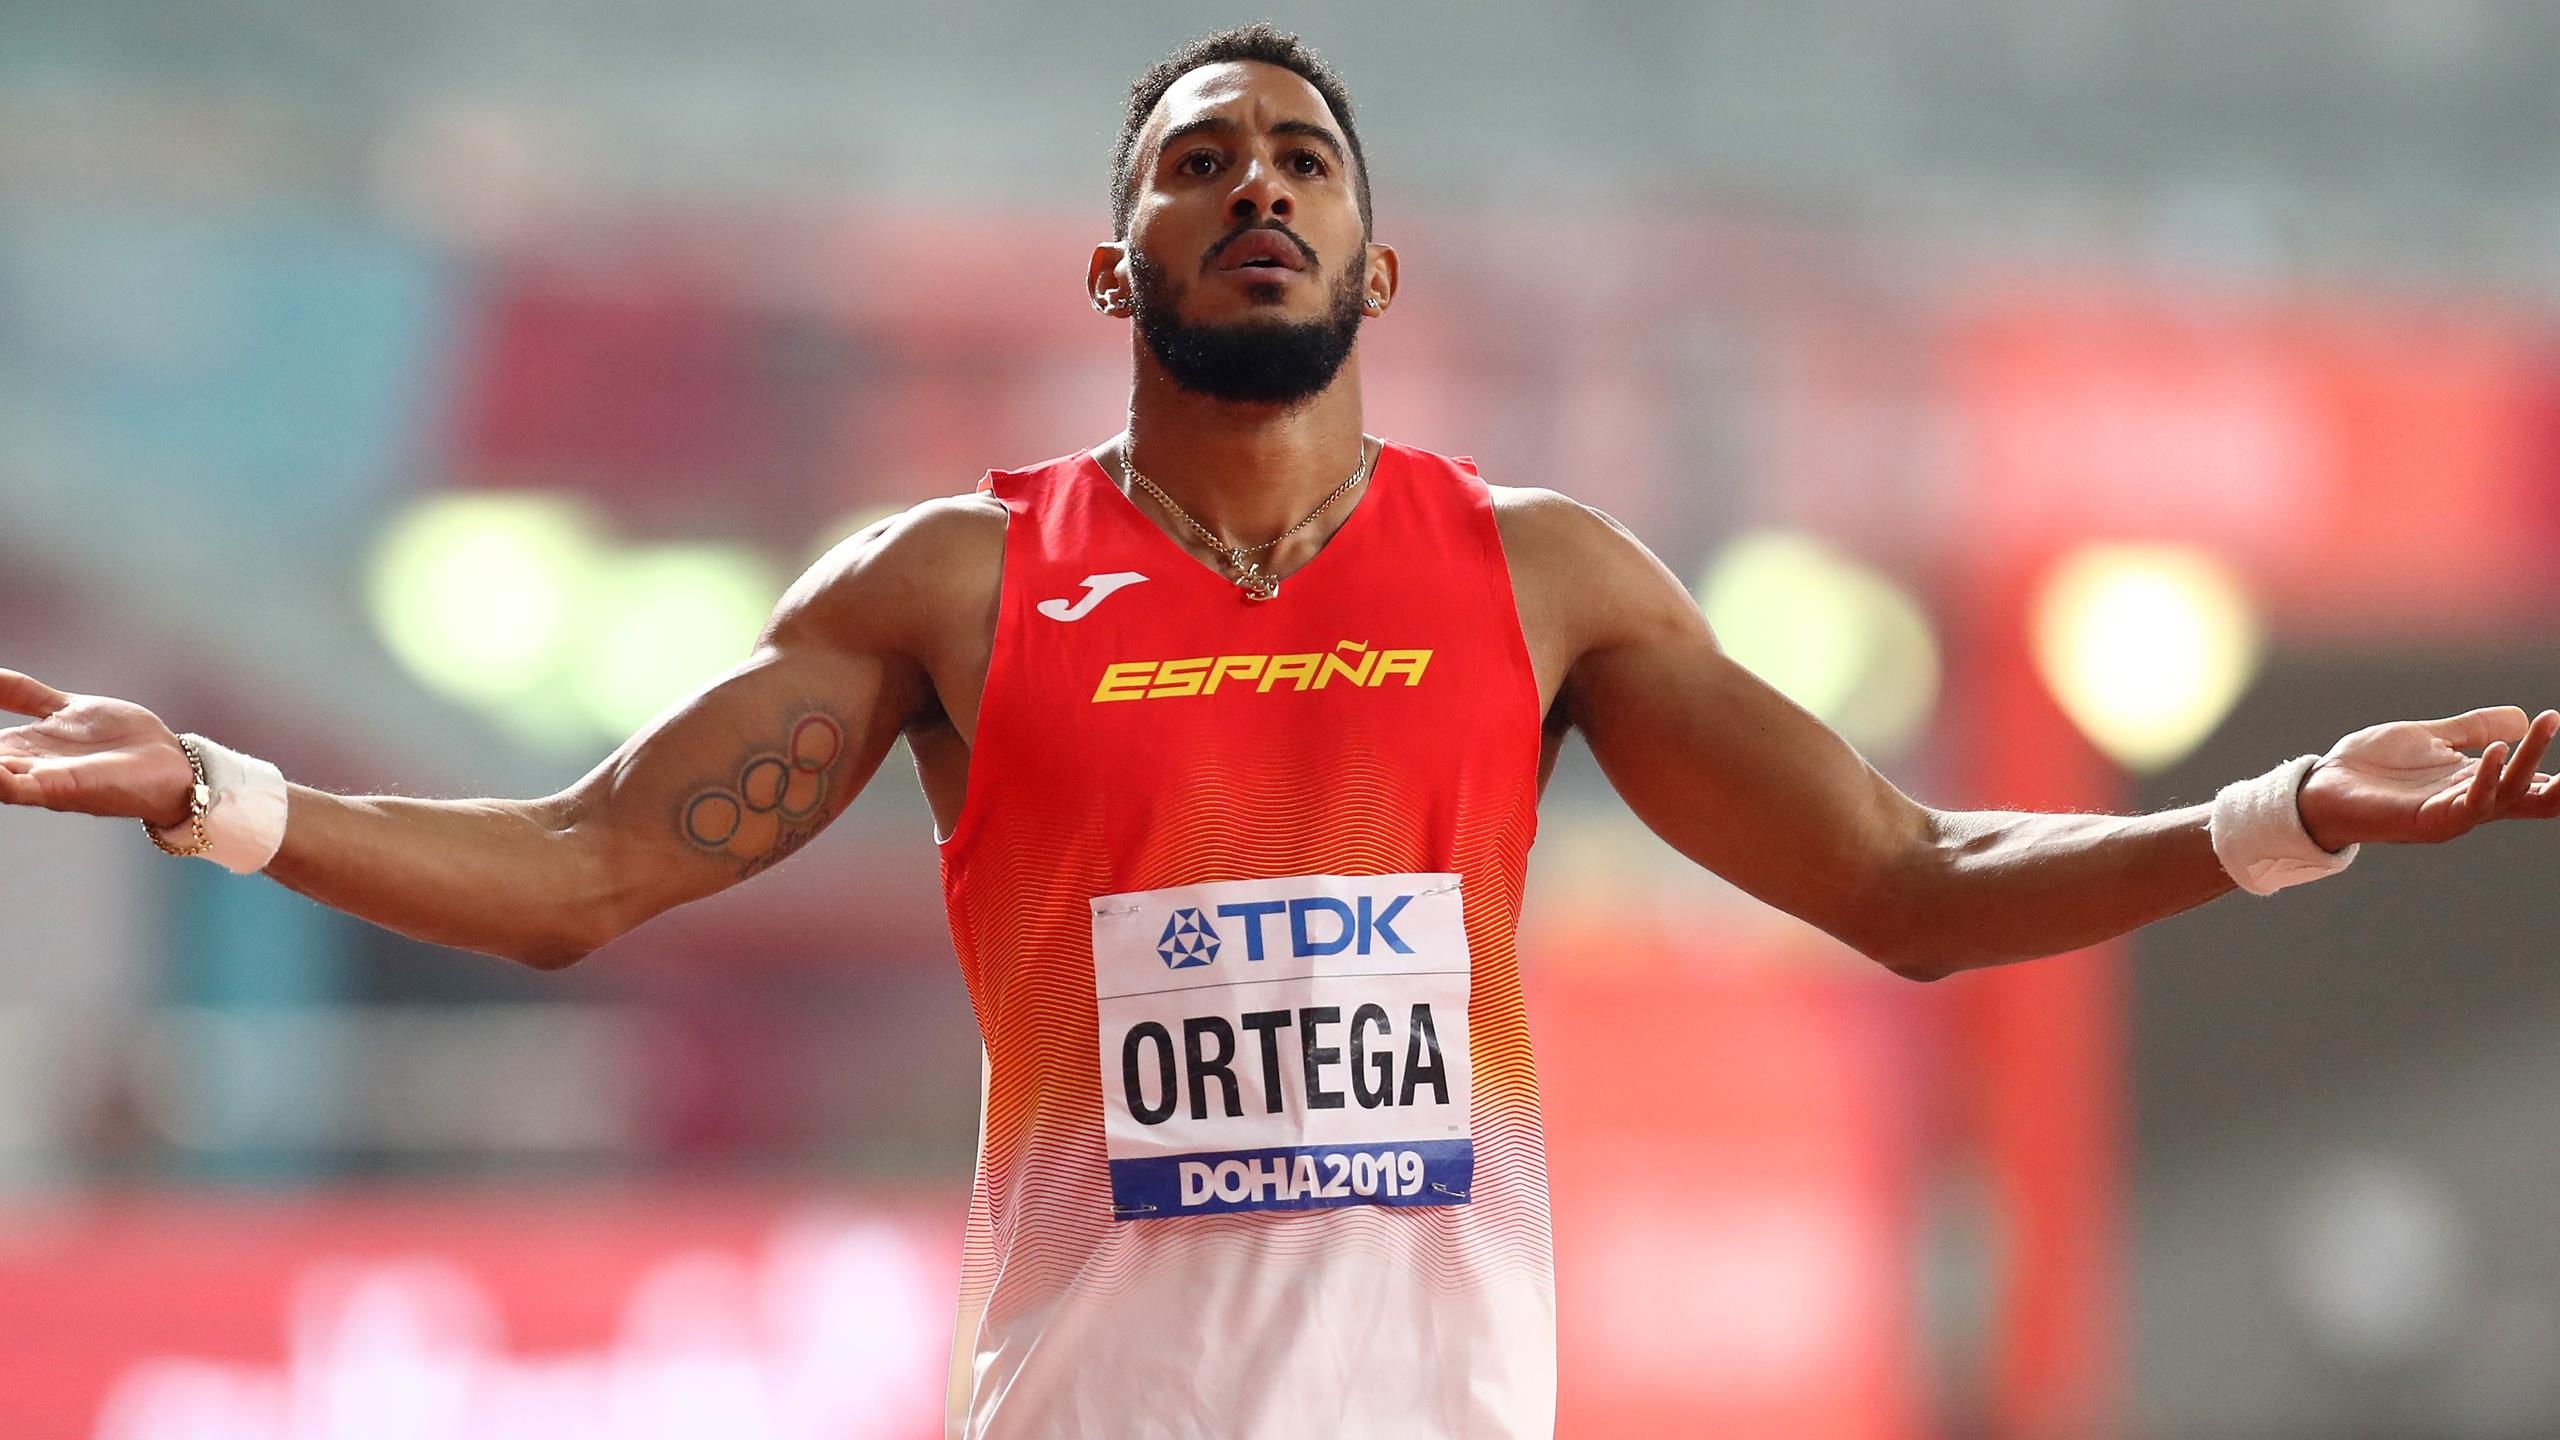 Orlando Ortega, Athlete profile, World Athletics, Competitive spirit, 2560x1440 HD Desktop